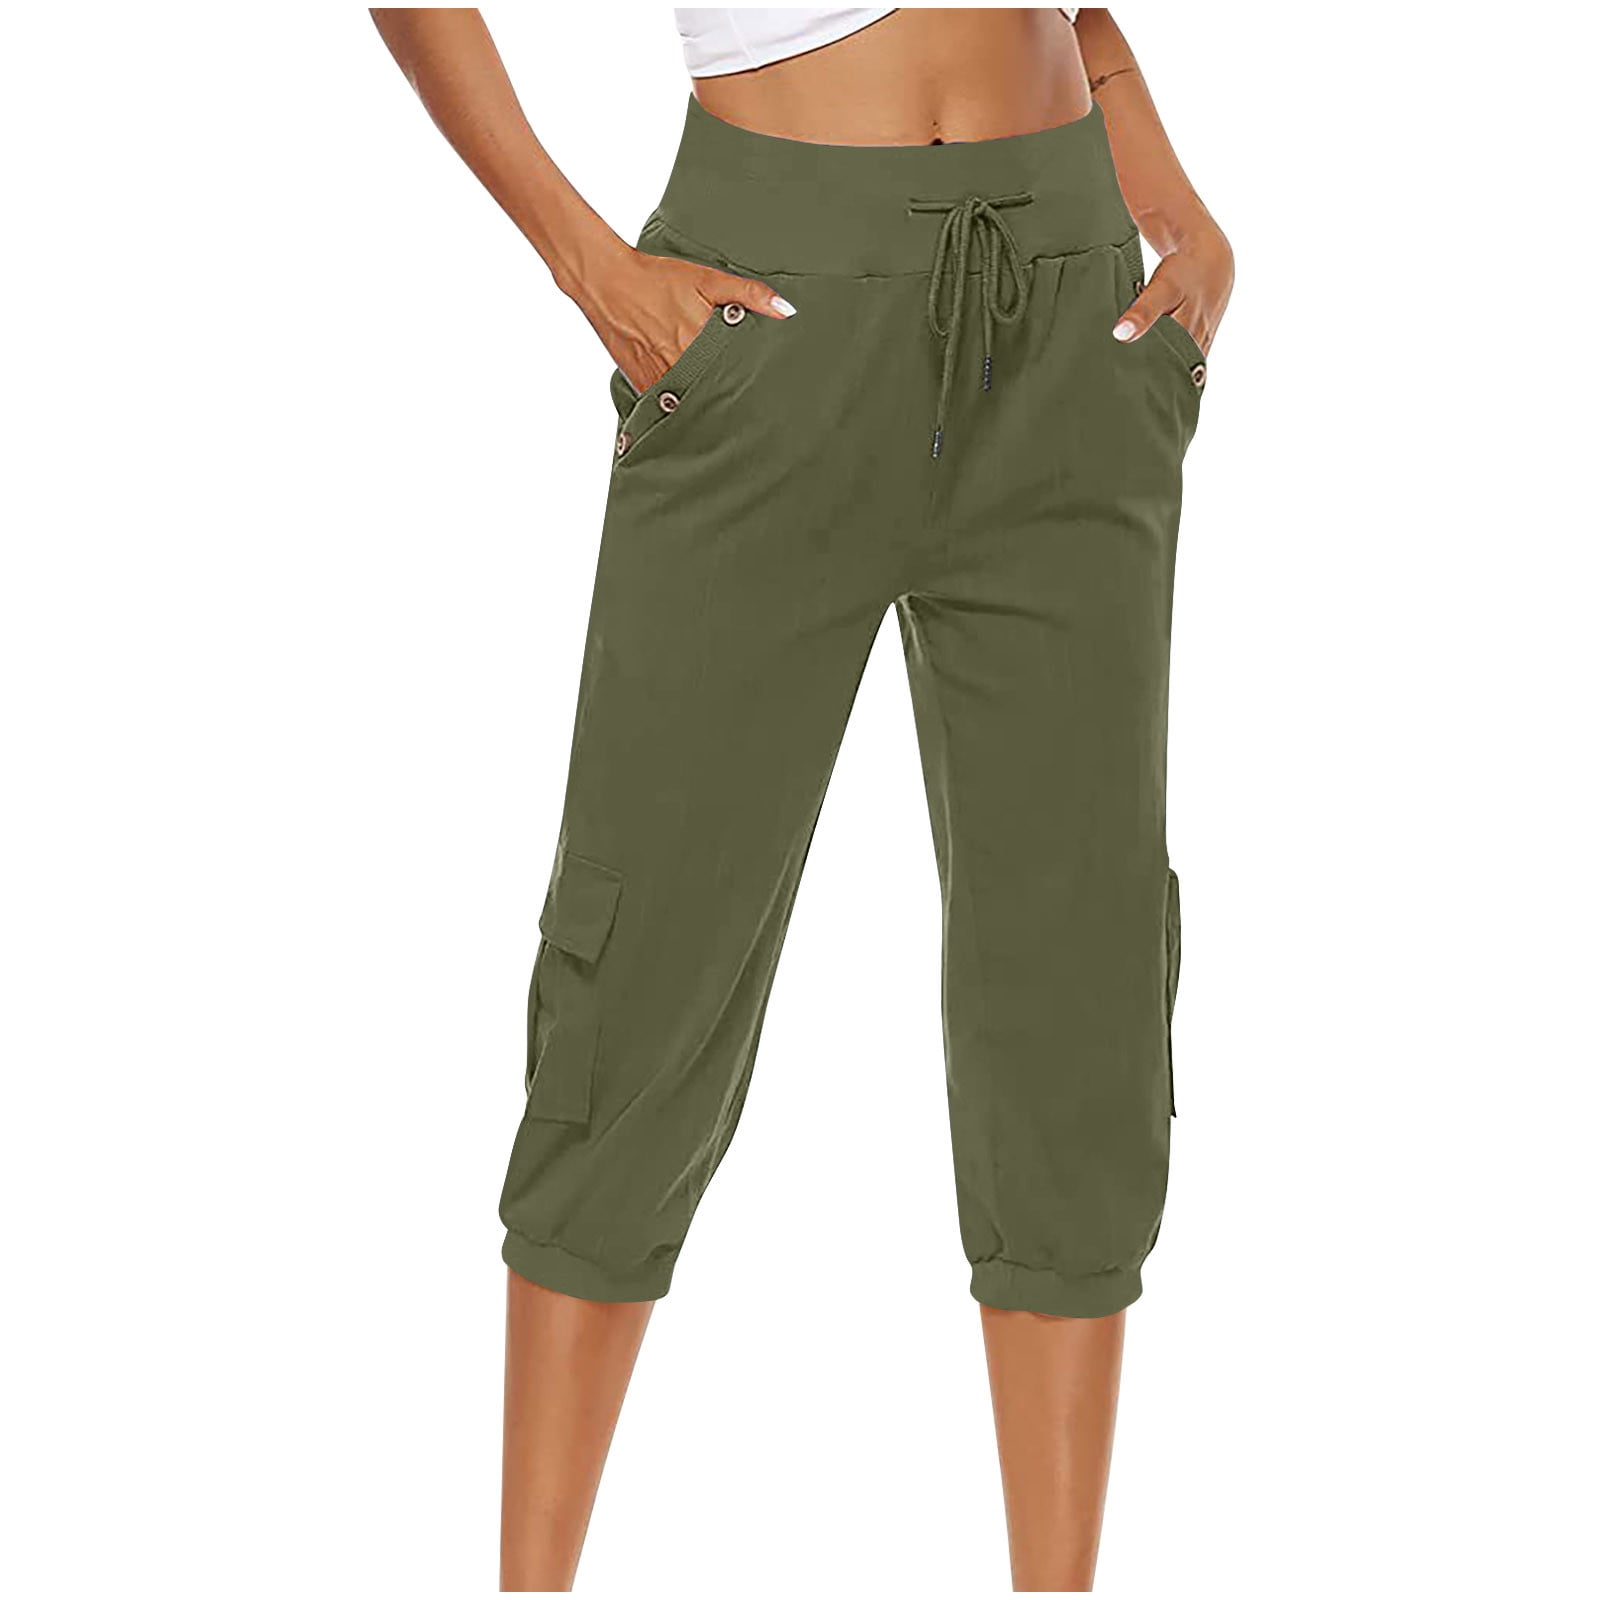 Capri Pants for Women Cotton Linen Plus Size Cargo Pants Capris Elastic  High Waisted 3/4 Slacks with Multi Pockets (Small, Blue) 